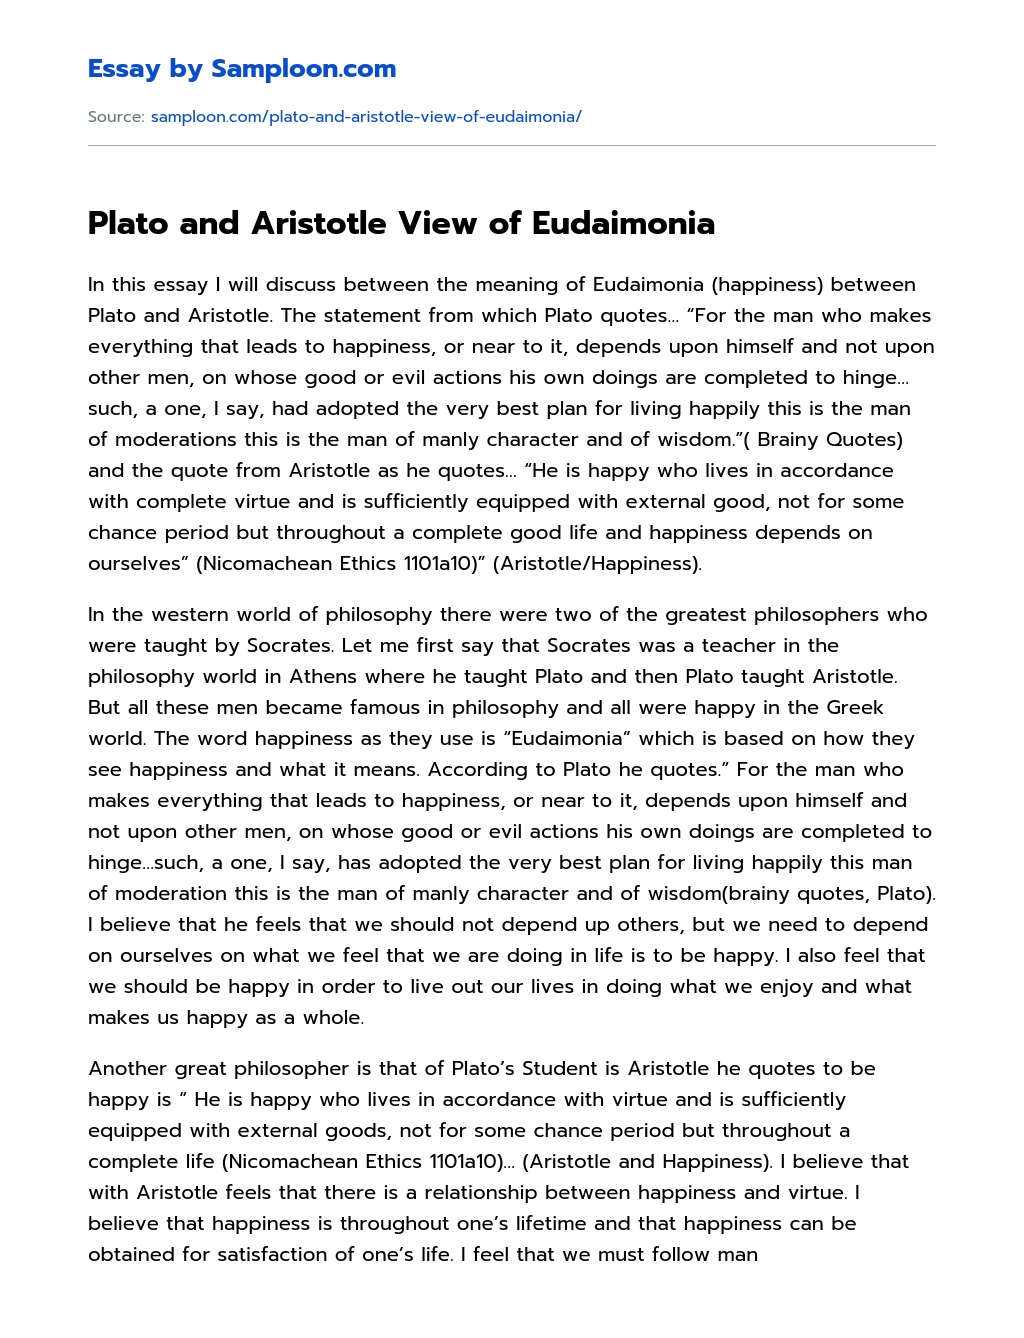 Plato and Aristotle View of Eudaimonia essay